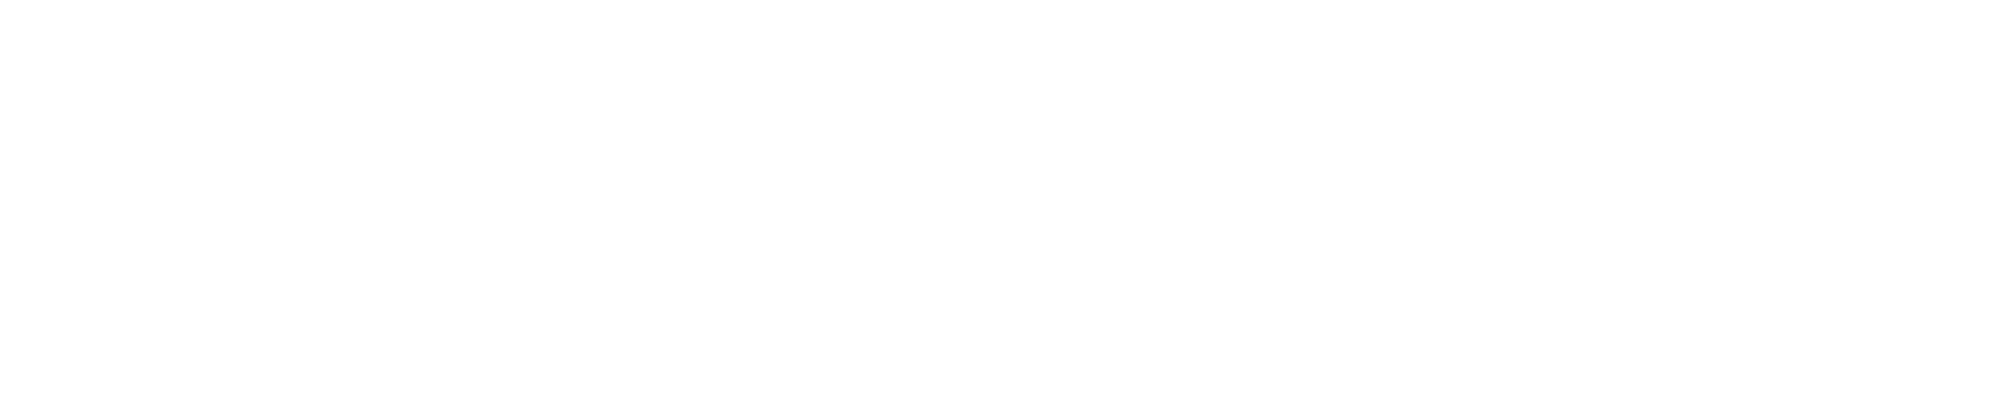 Colegio Pedro Martínez Vázquez, A.C.